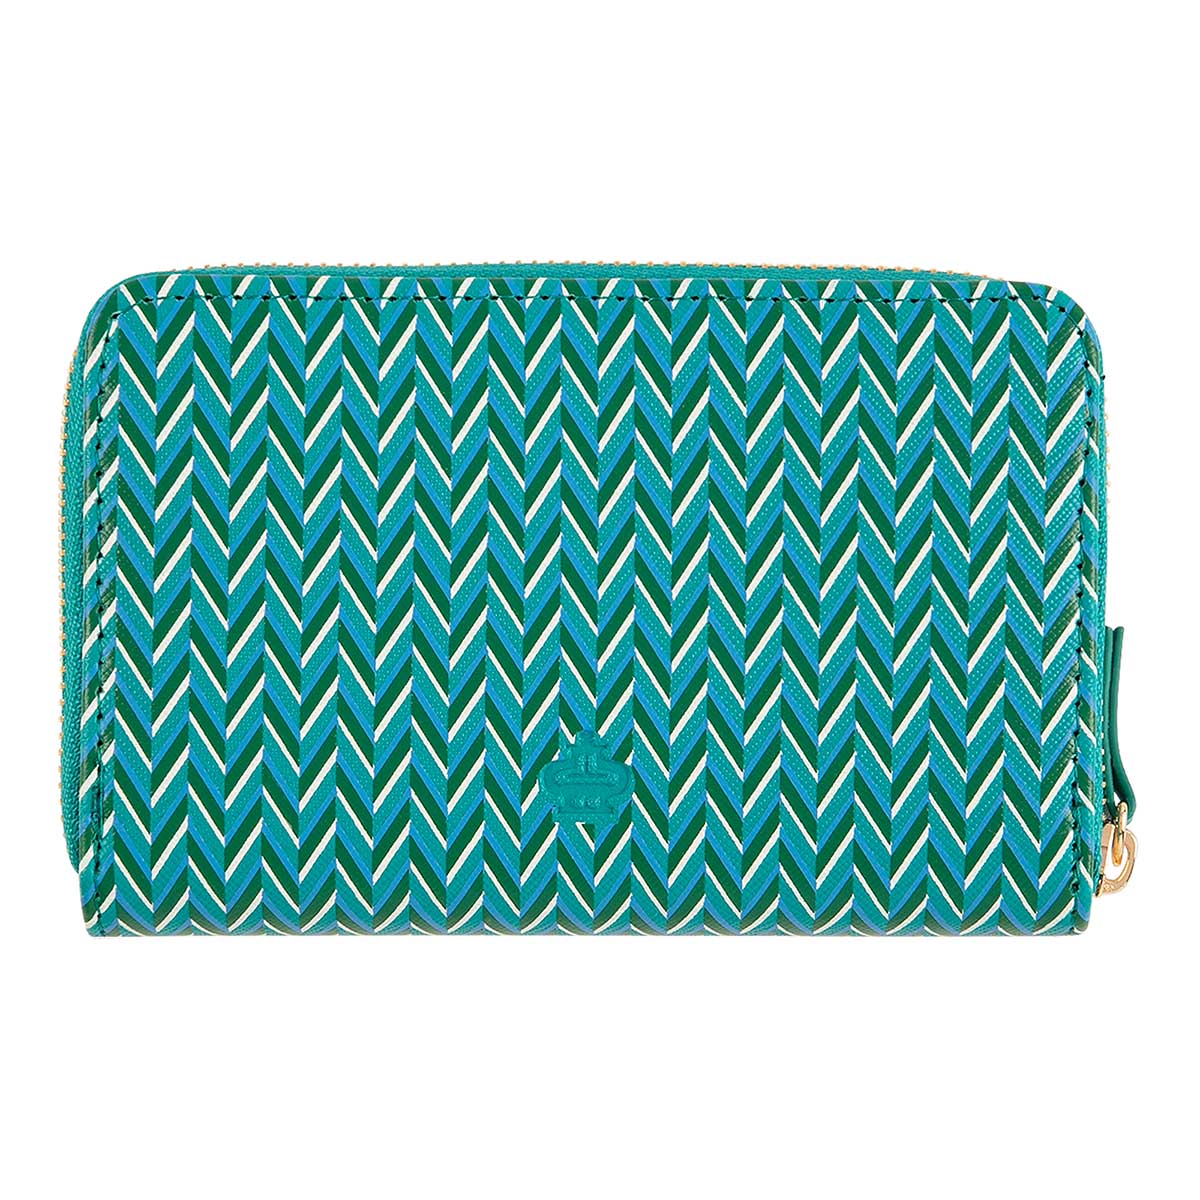 Women's wallet - graphic patterns - green